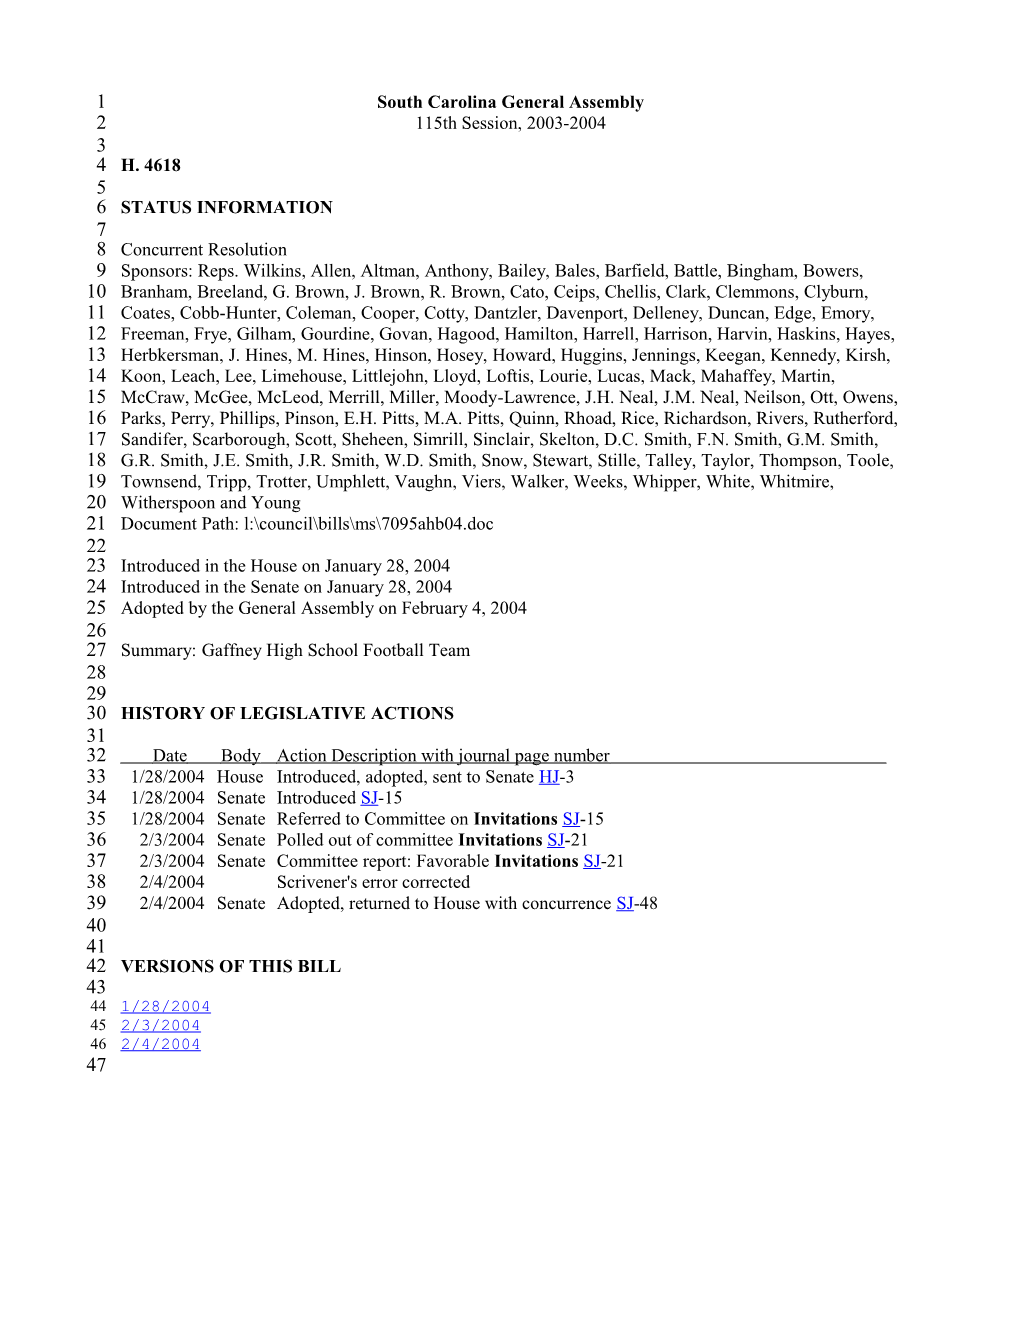 2003-2004 Bill 4618: Gaffney High School Football Team - South Carolina Legislature Online